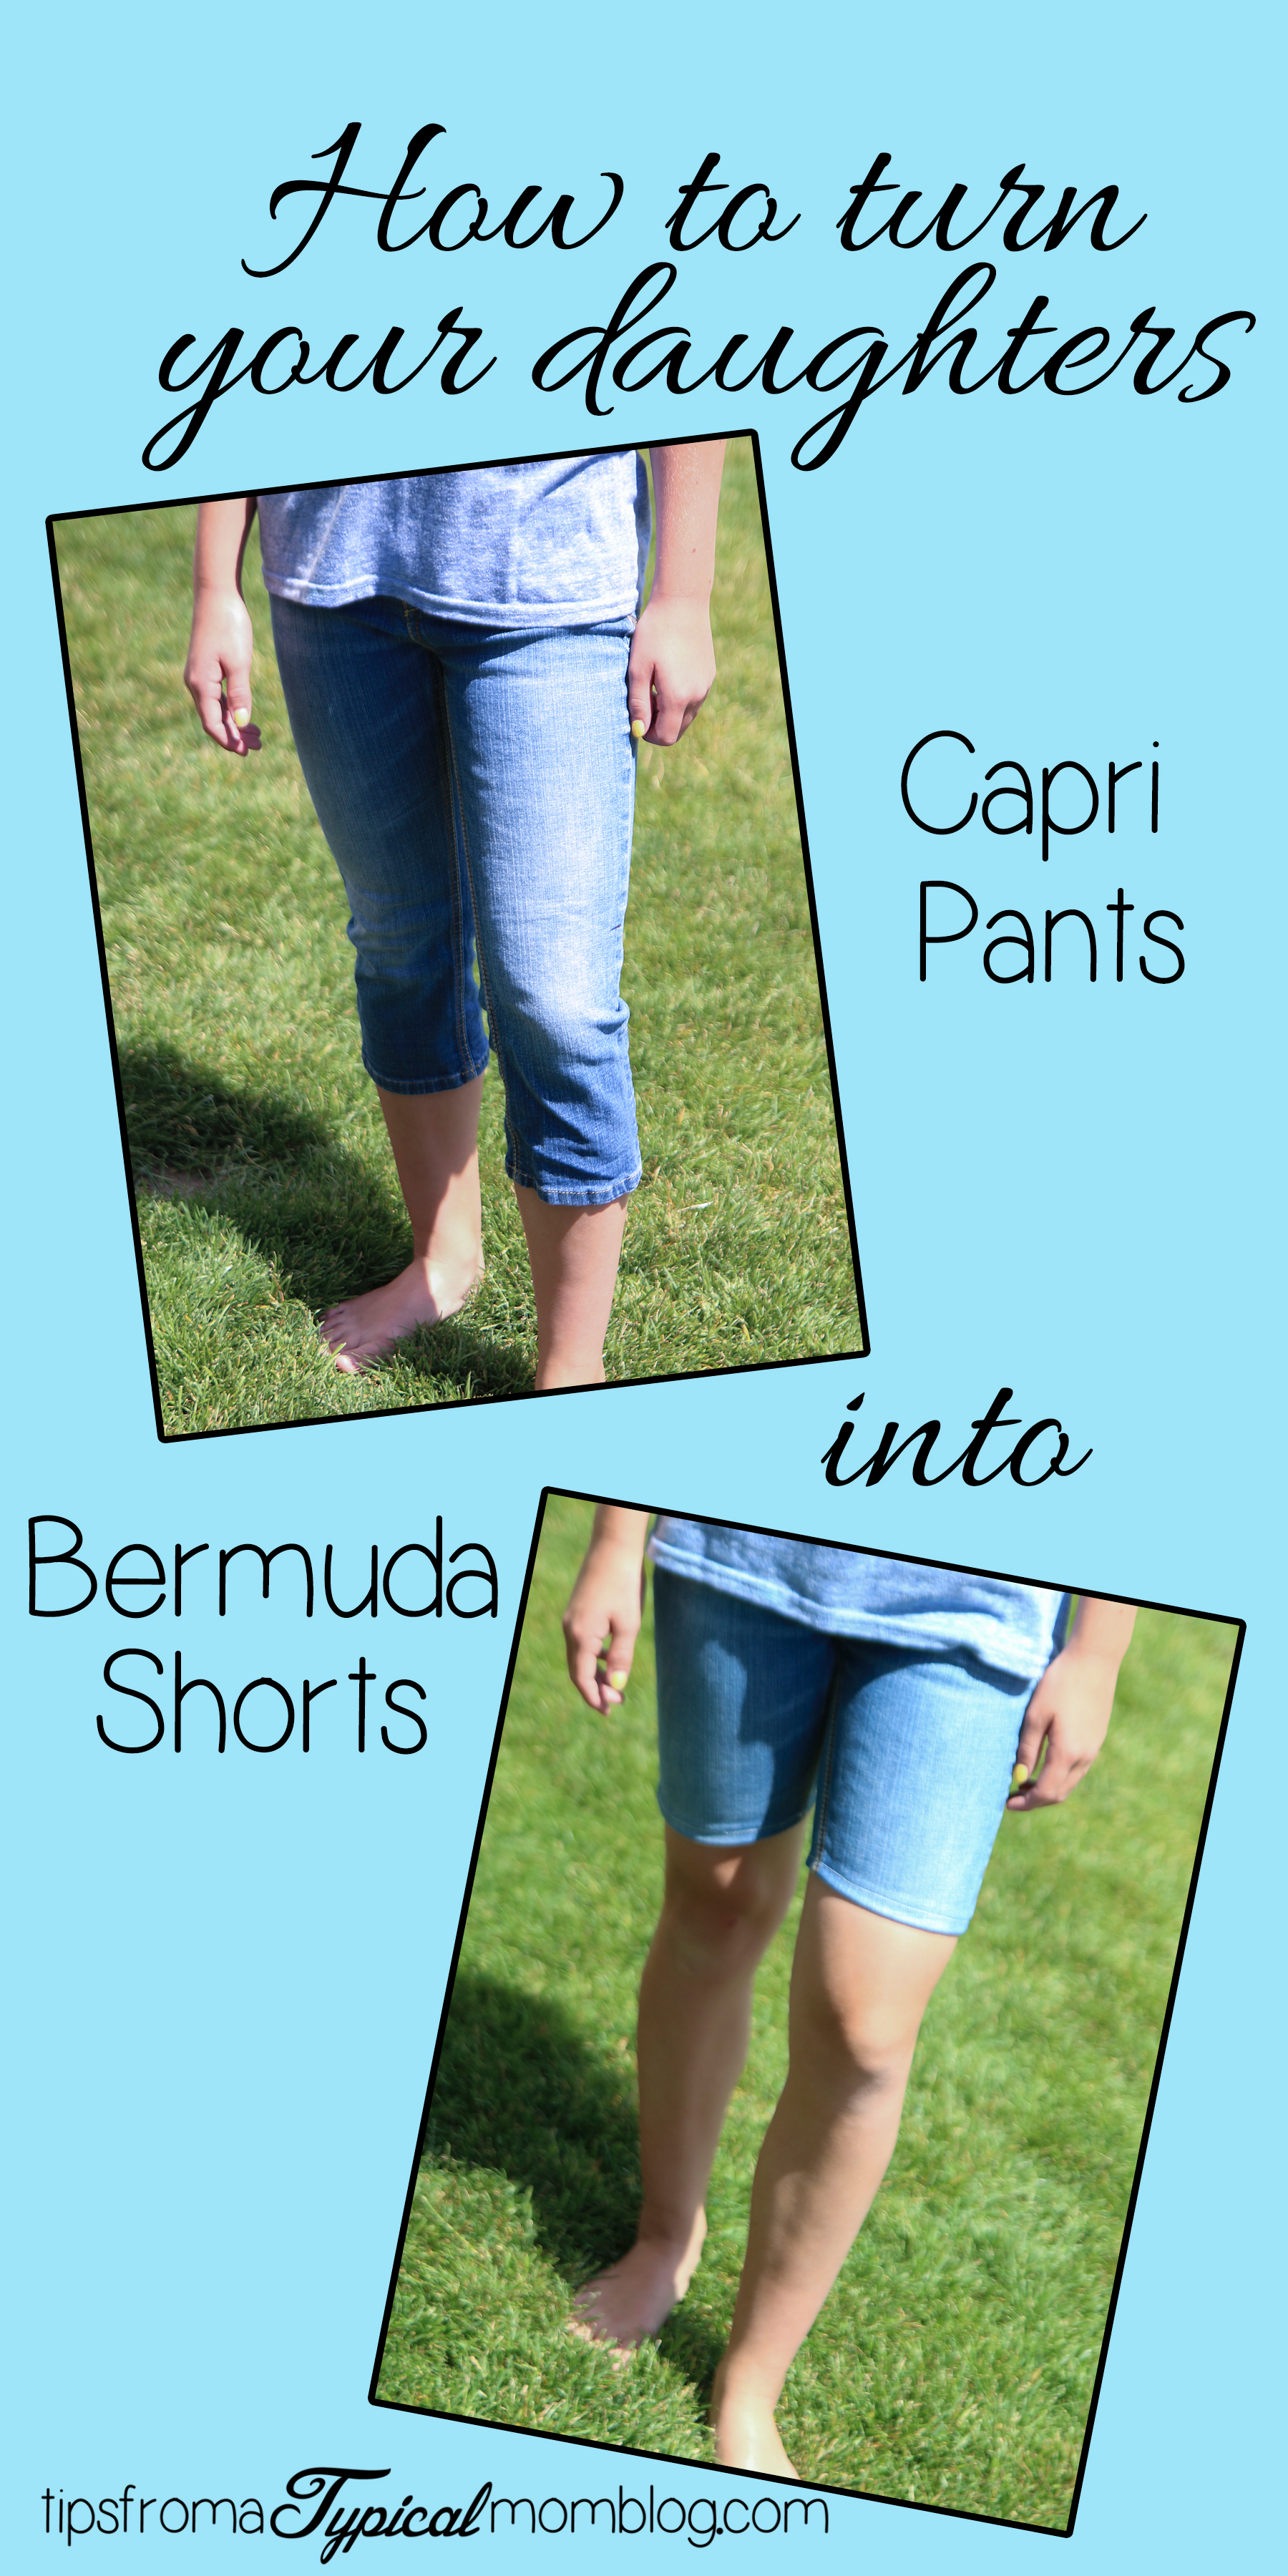 How to Turn Capri Pants into Bermuda Shorts